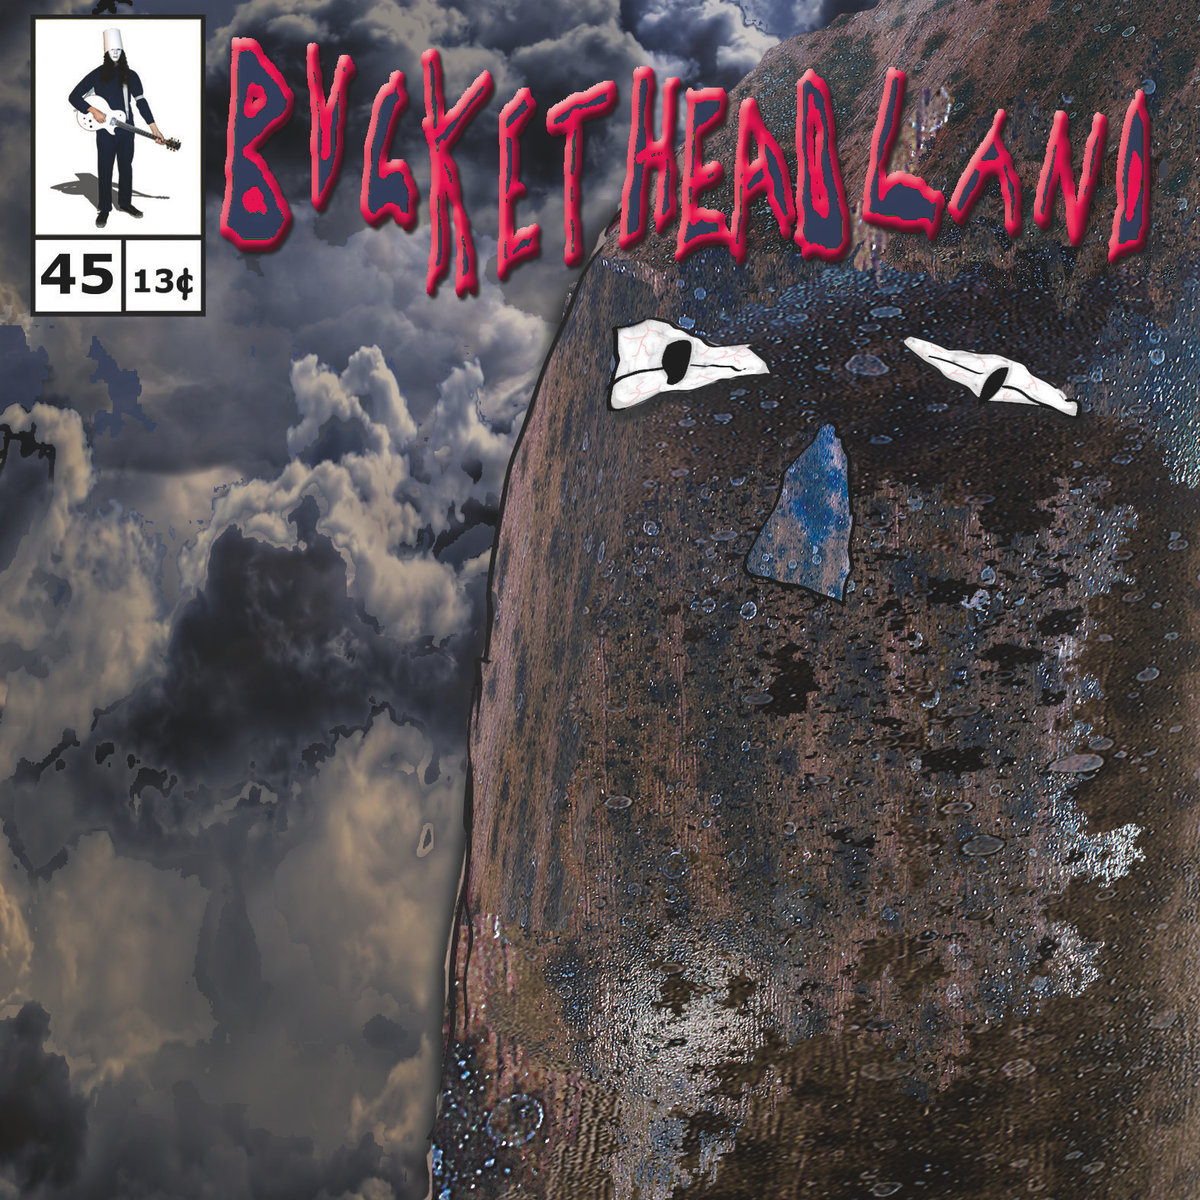 Buckethead - Pike 45: The Coats Of Claude (2014)